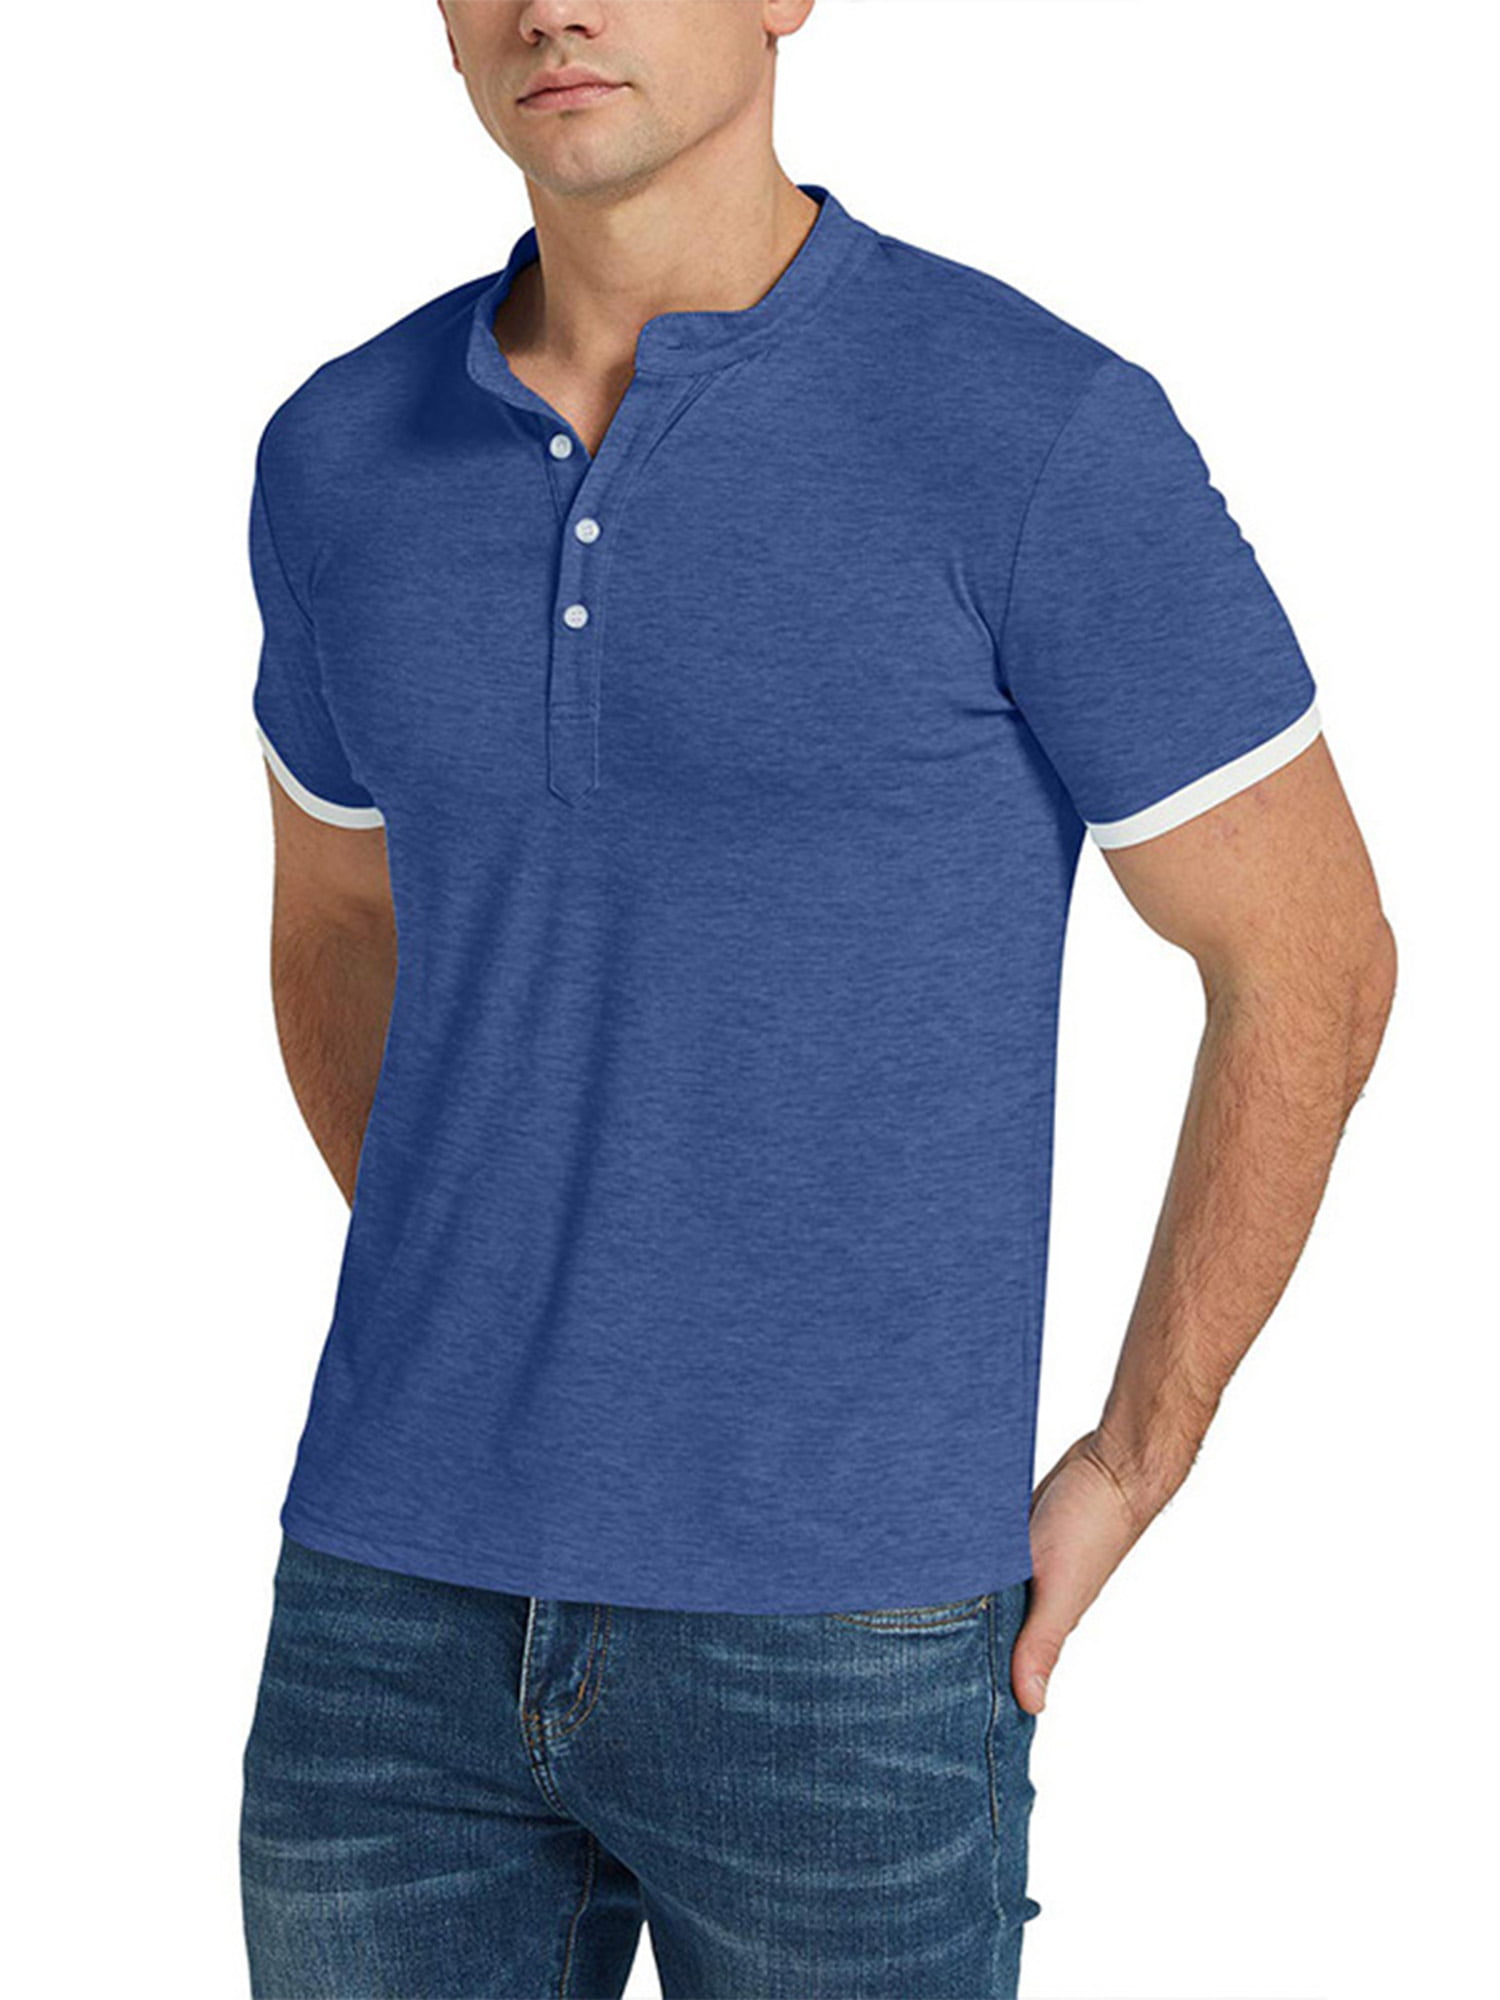 Men's Solid Polo Short Sleeve Shirt Pique Casual Cotton Top New Size M L XL XXL